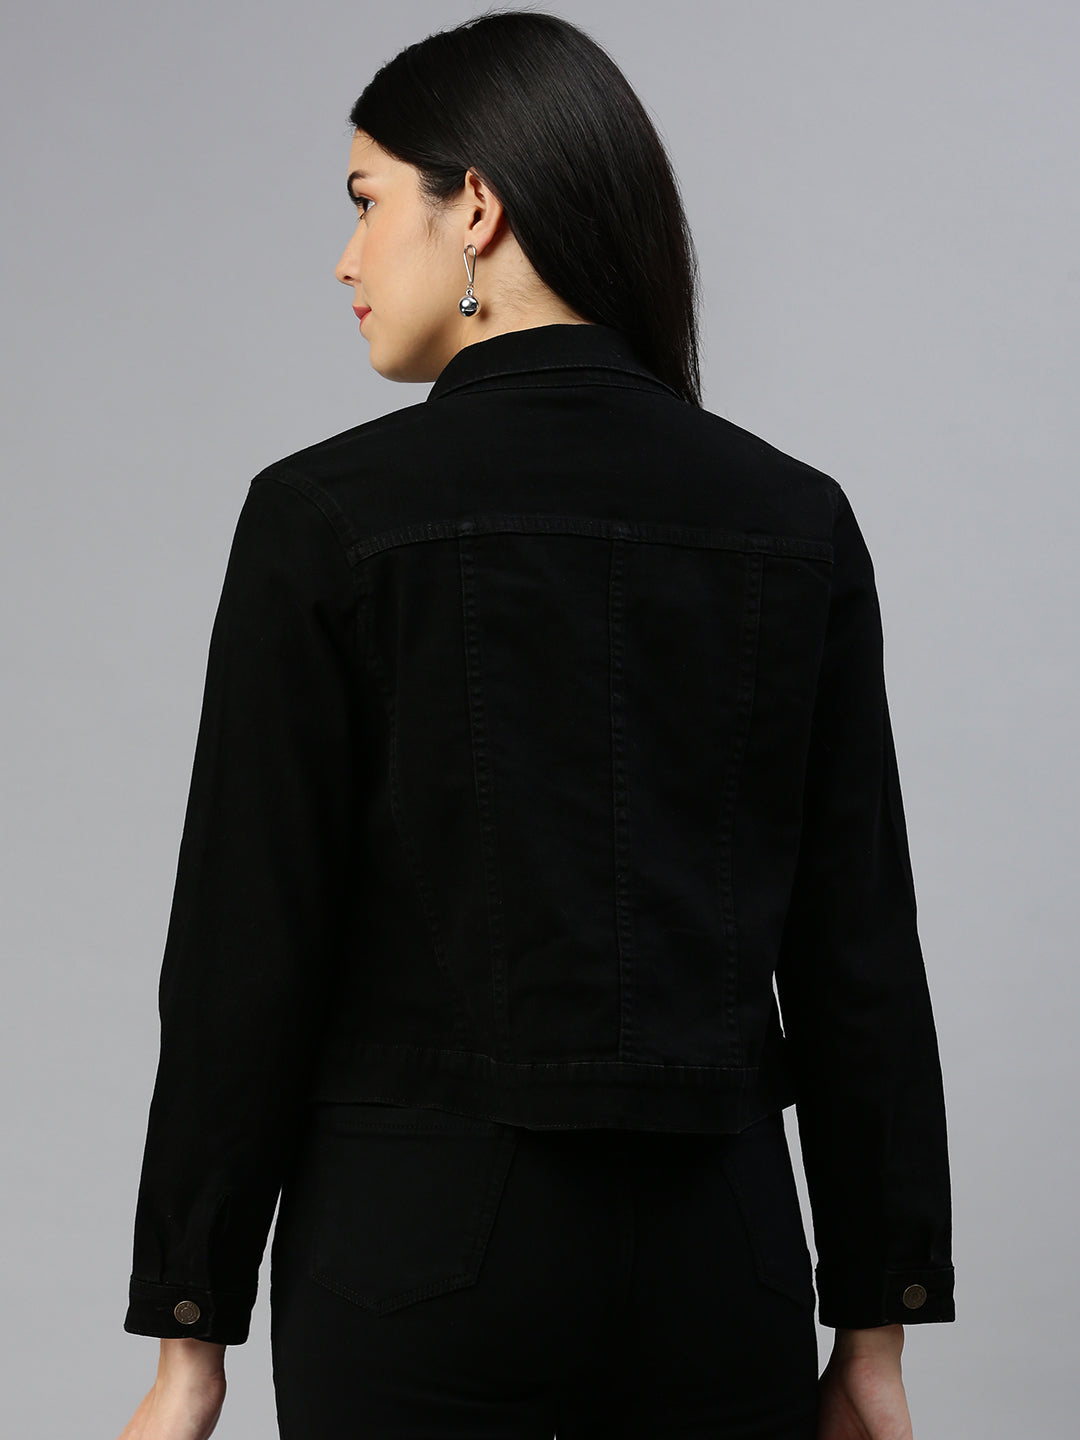 Arham Full Sleeve Solid Women Denim Jacket - Buy Arham Full Sleeve Solid Women  Denim Jacket Online at Best Prices in India | Flipkart.com